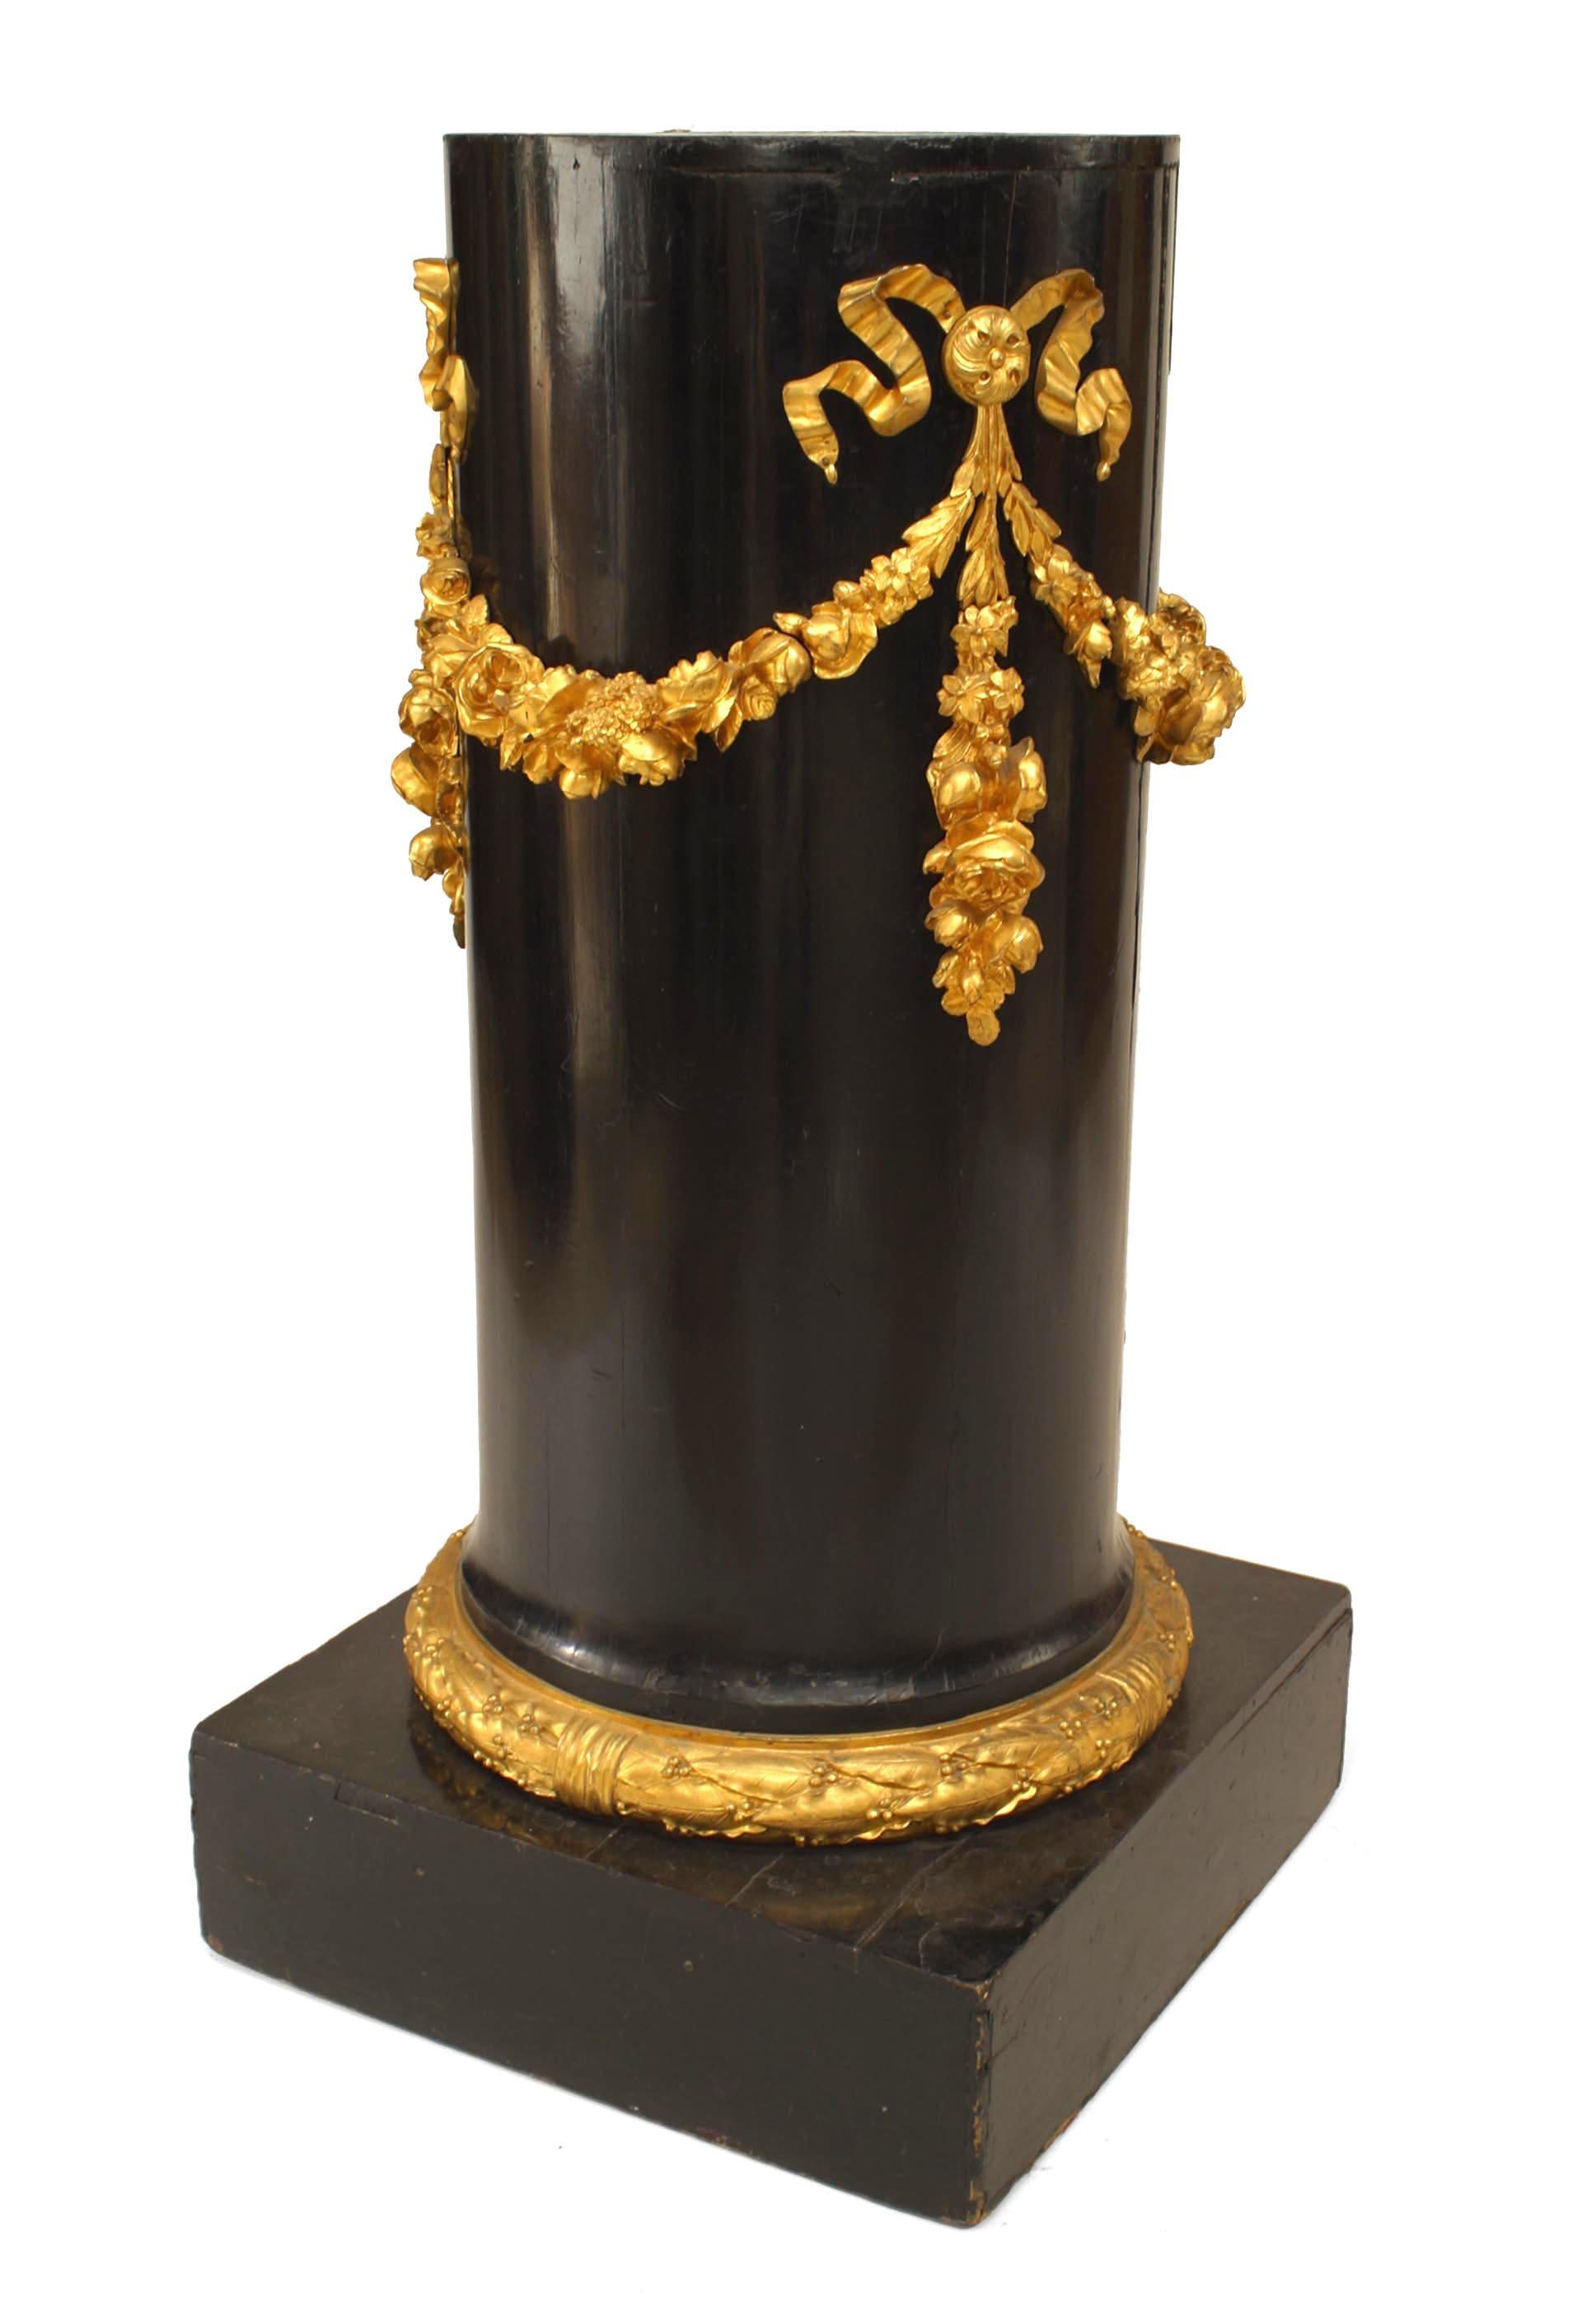 Pair of French Empire black lacquer column pedestals with bronze dore festoon trim.
